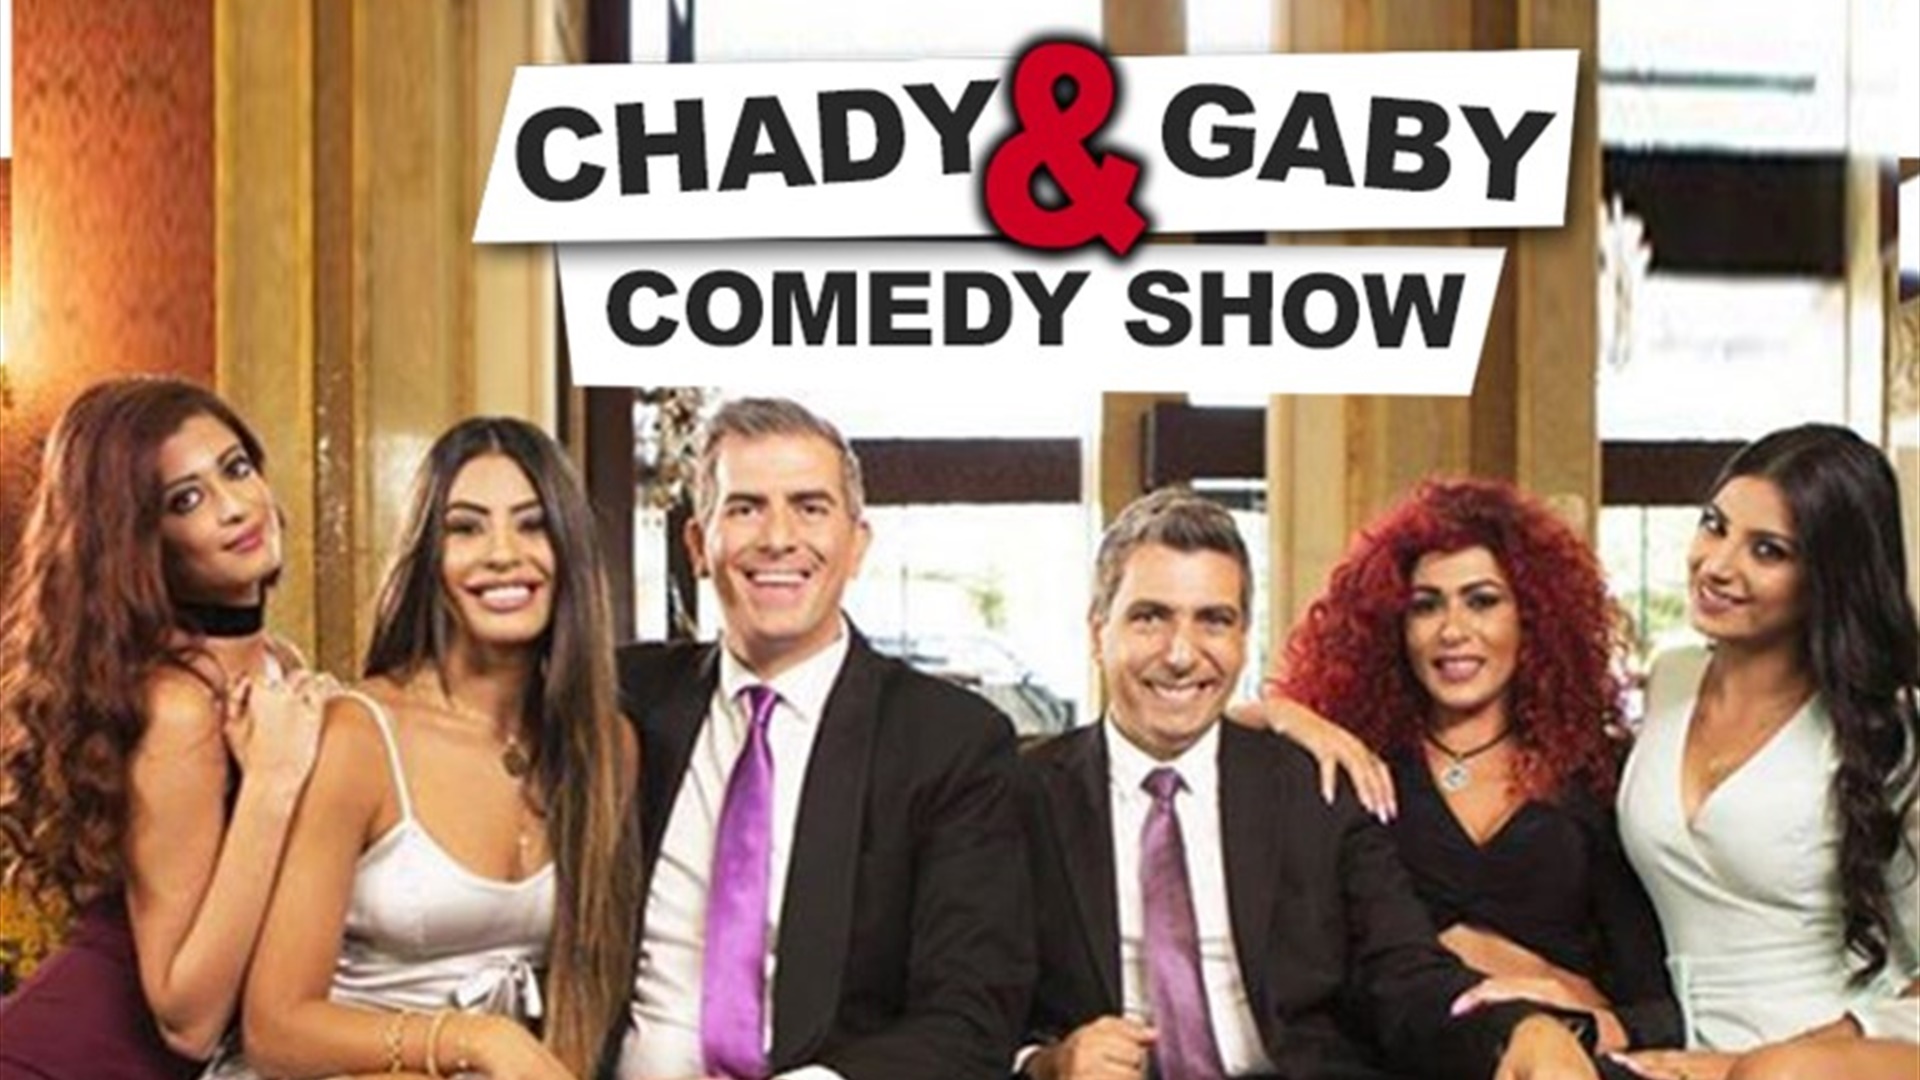 Chady&Gaby Comedy Show